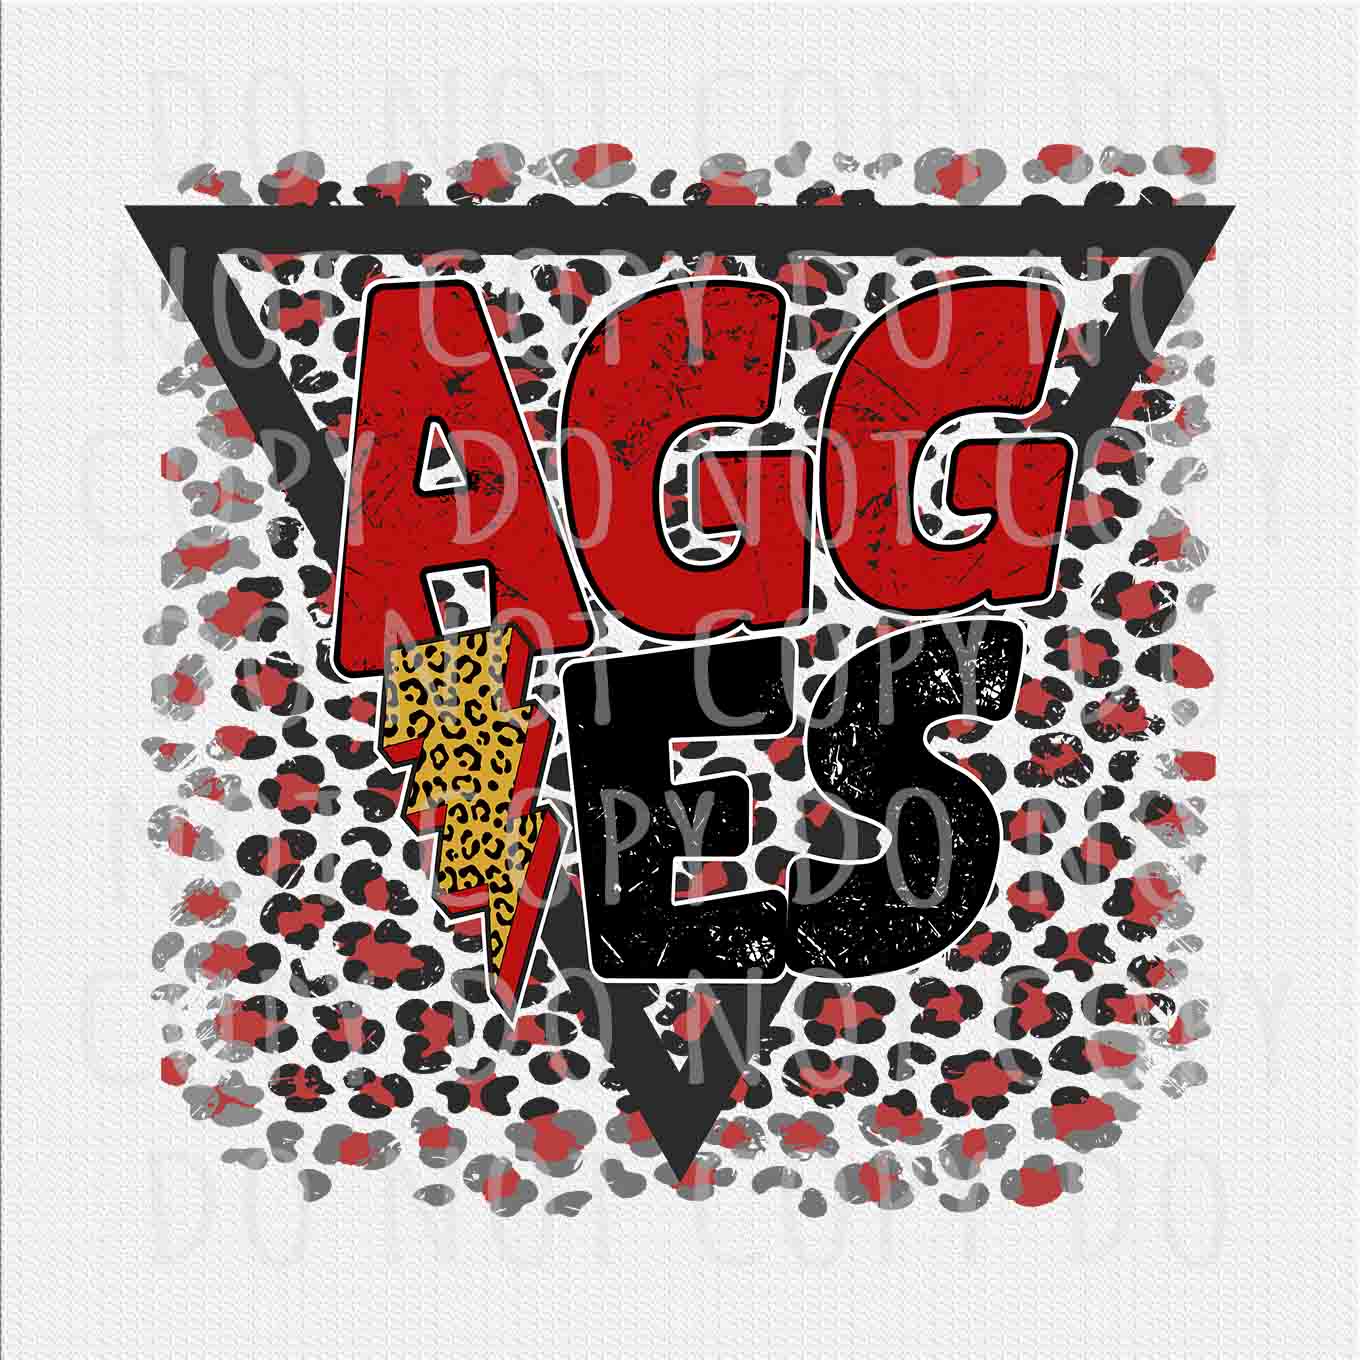 Aggies png, Aggies Red Black Leopard Lightening Bolt design png, Sublimation design png